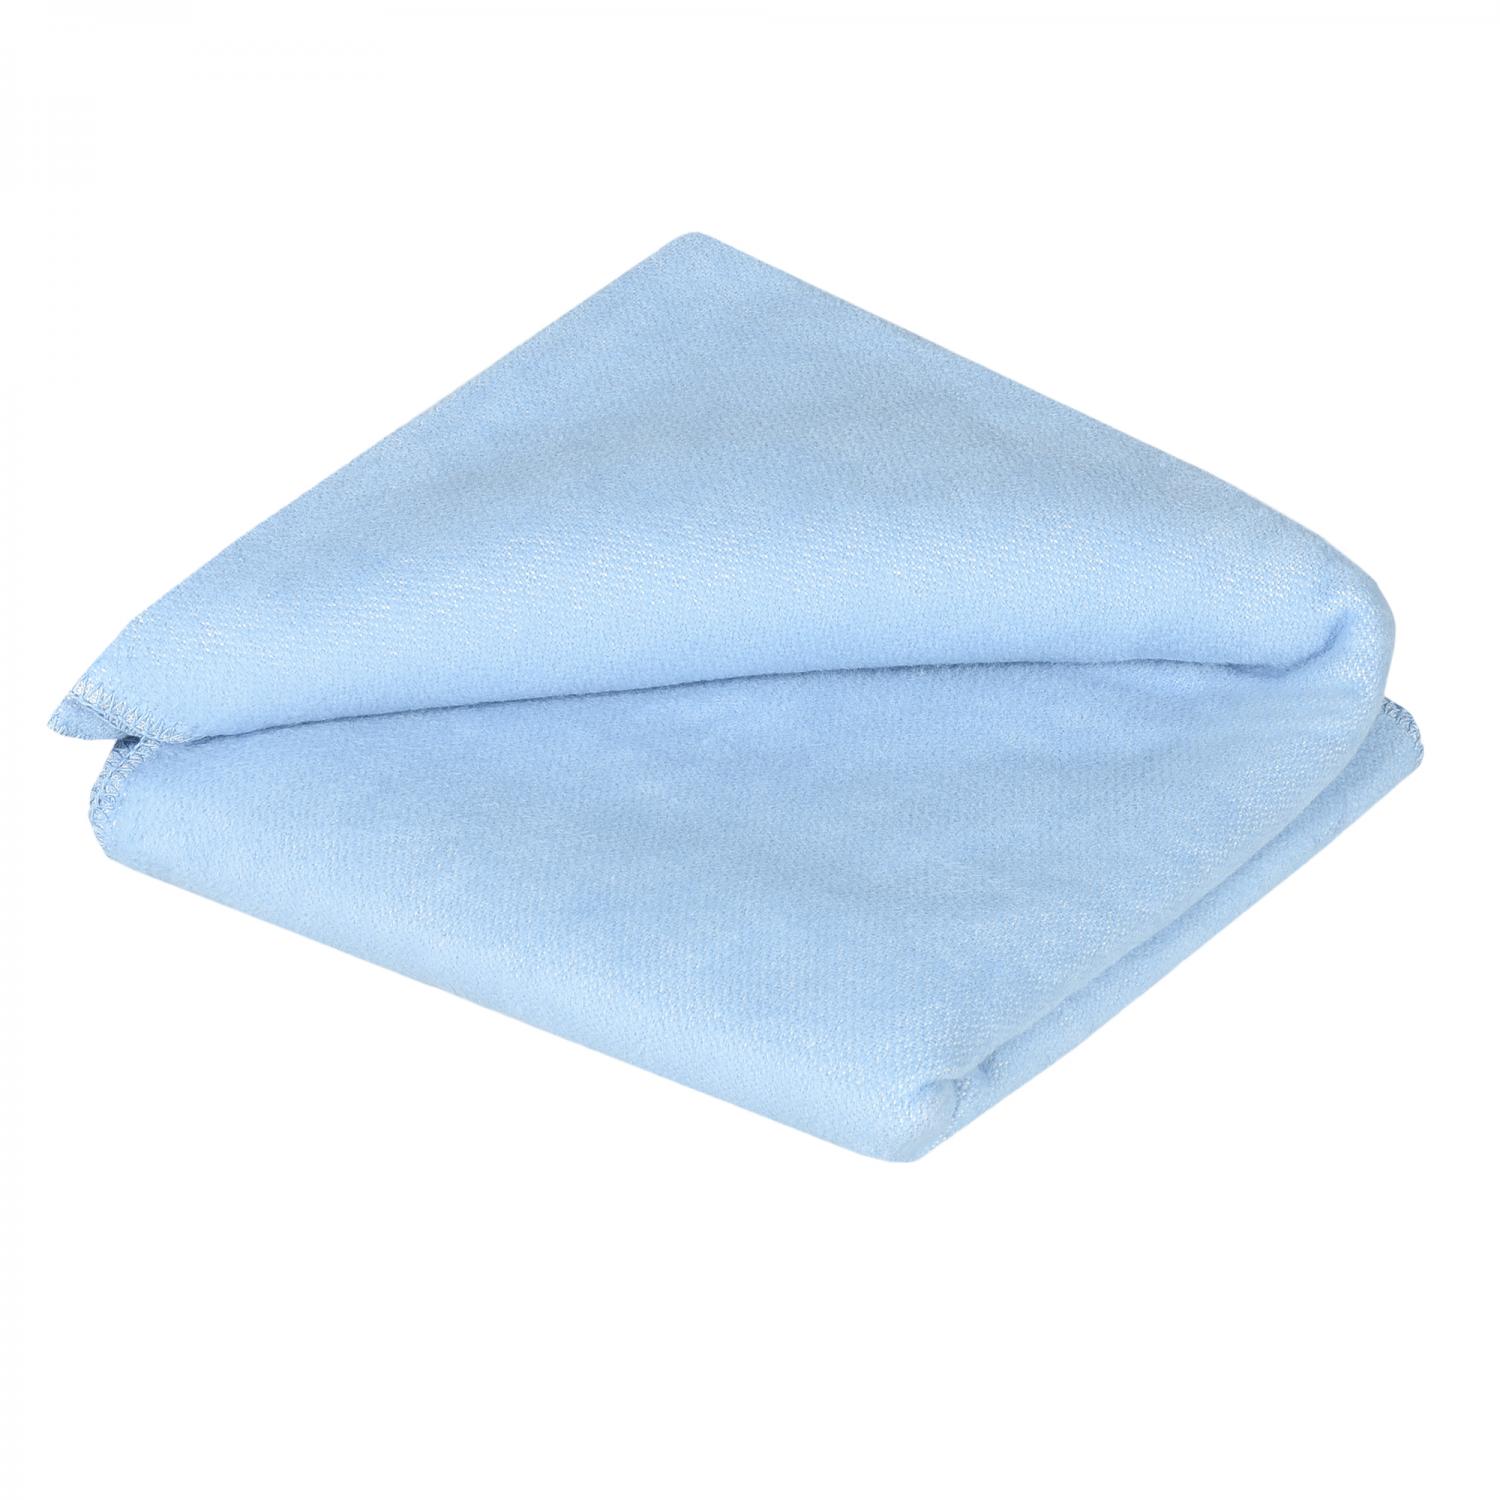 100% natural soft cotton luxury blanket